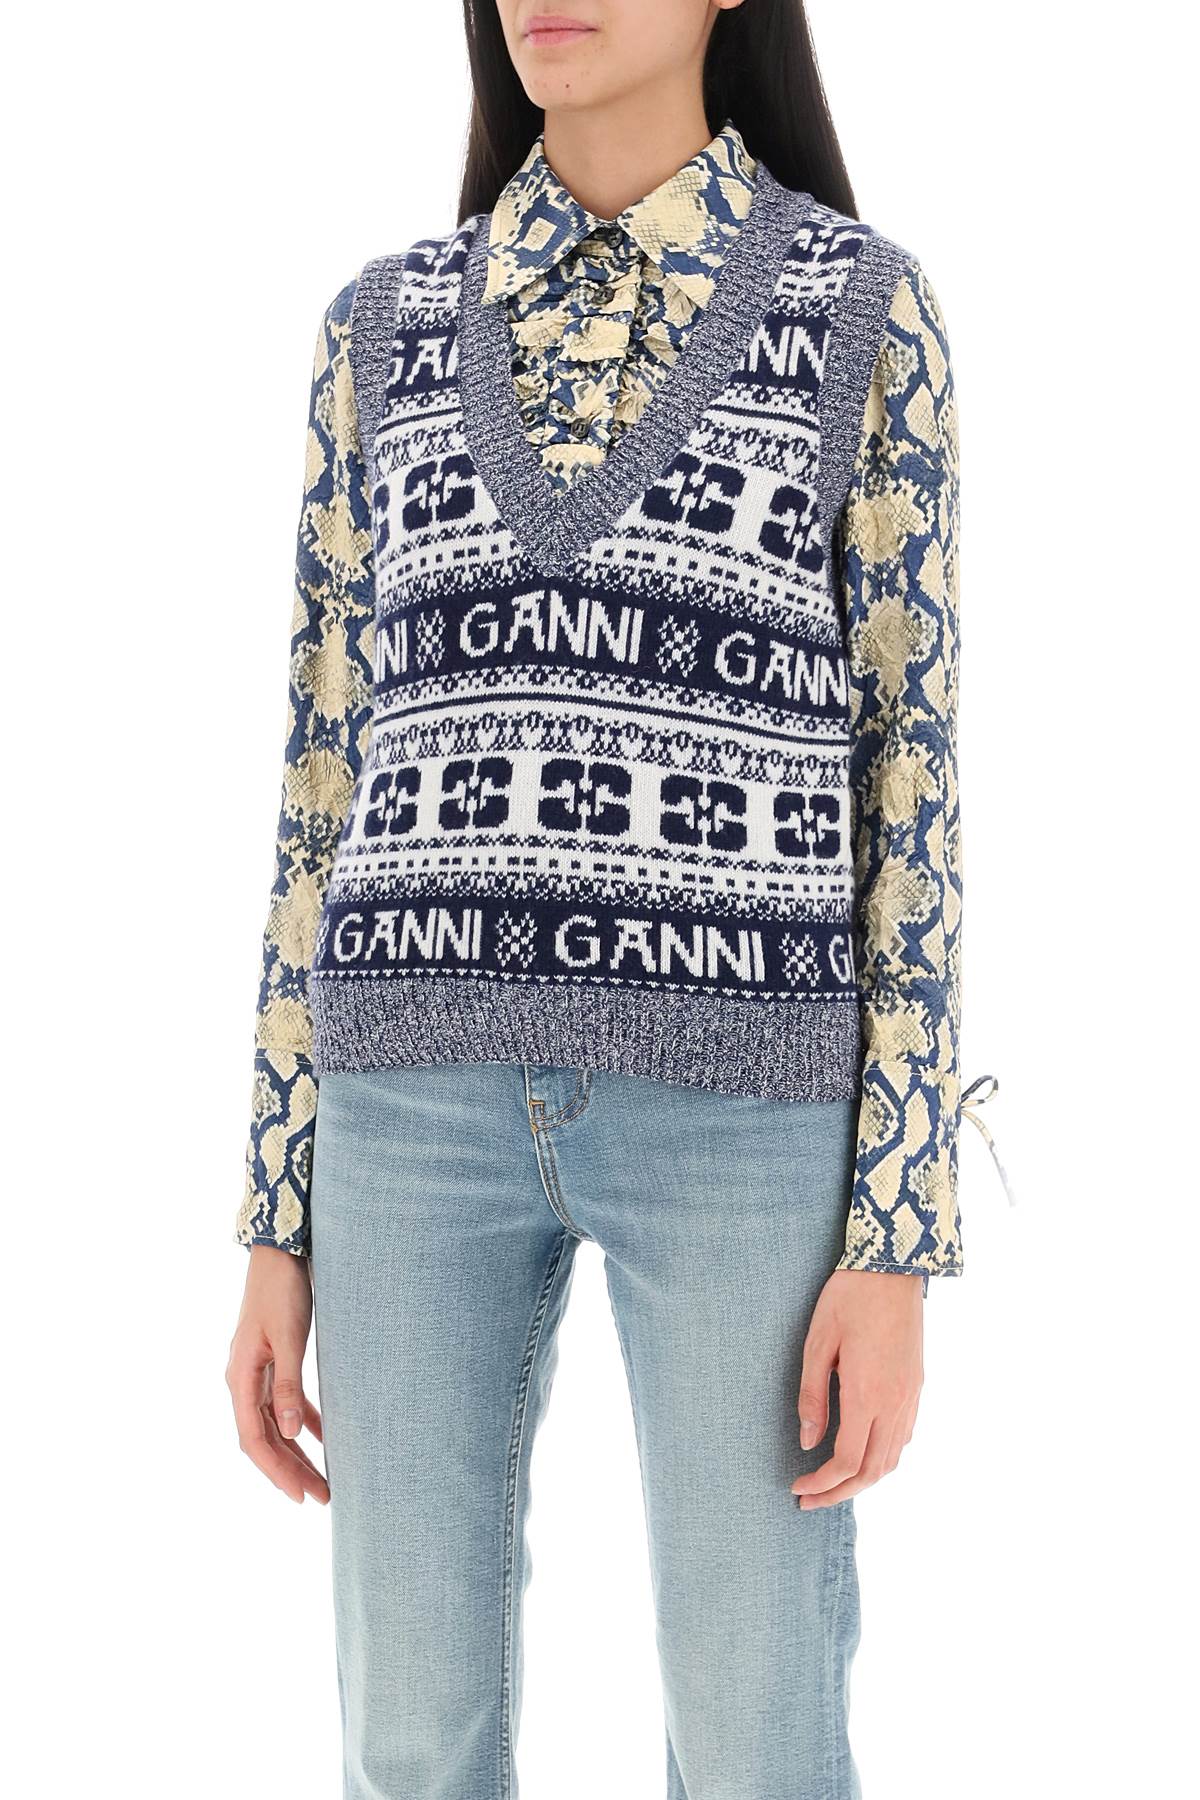 Ganni jacquard wool vest with logo pattern-3